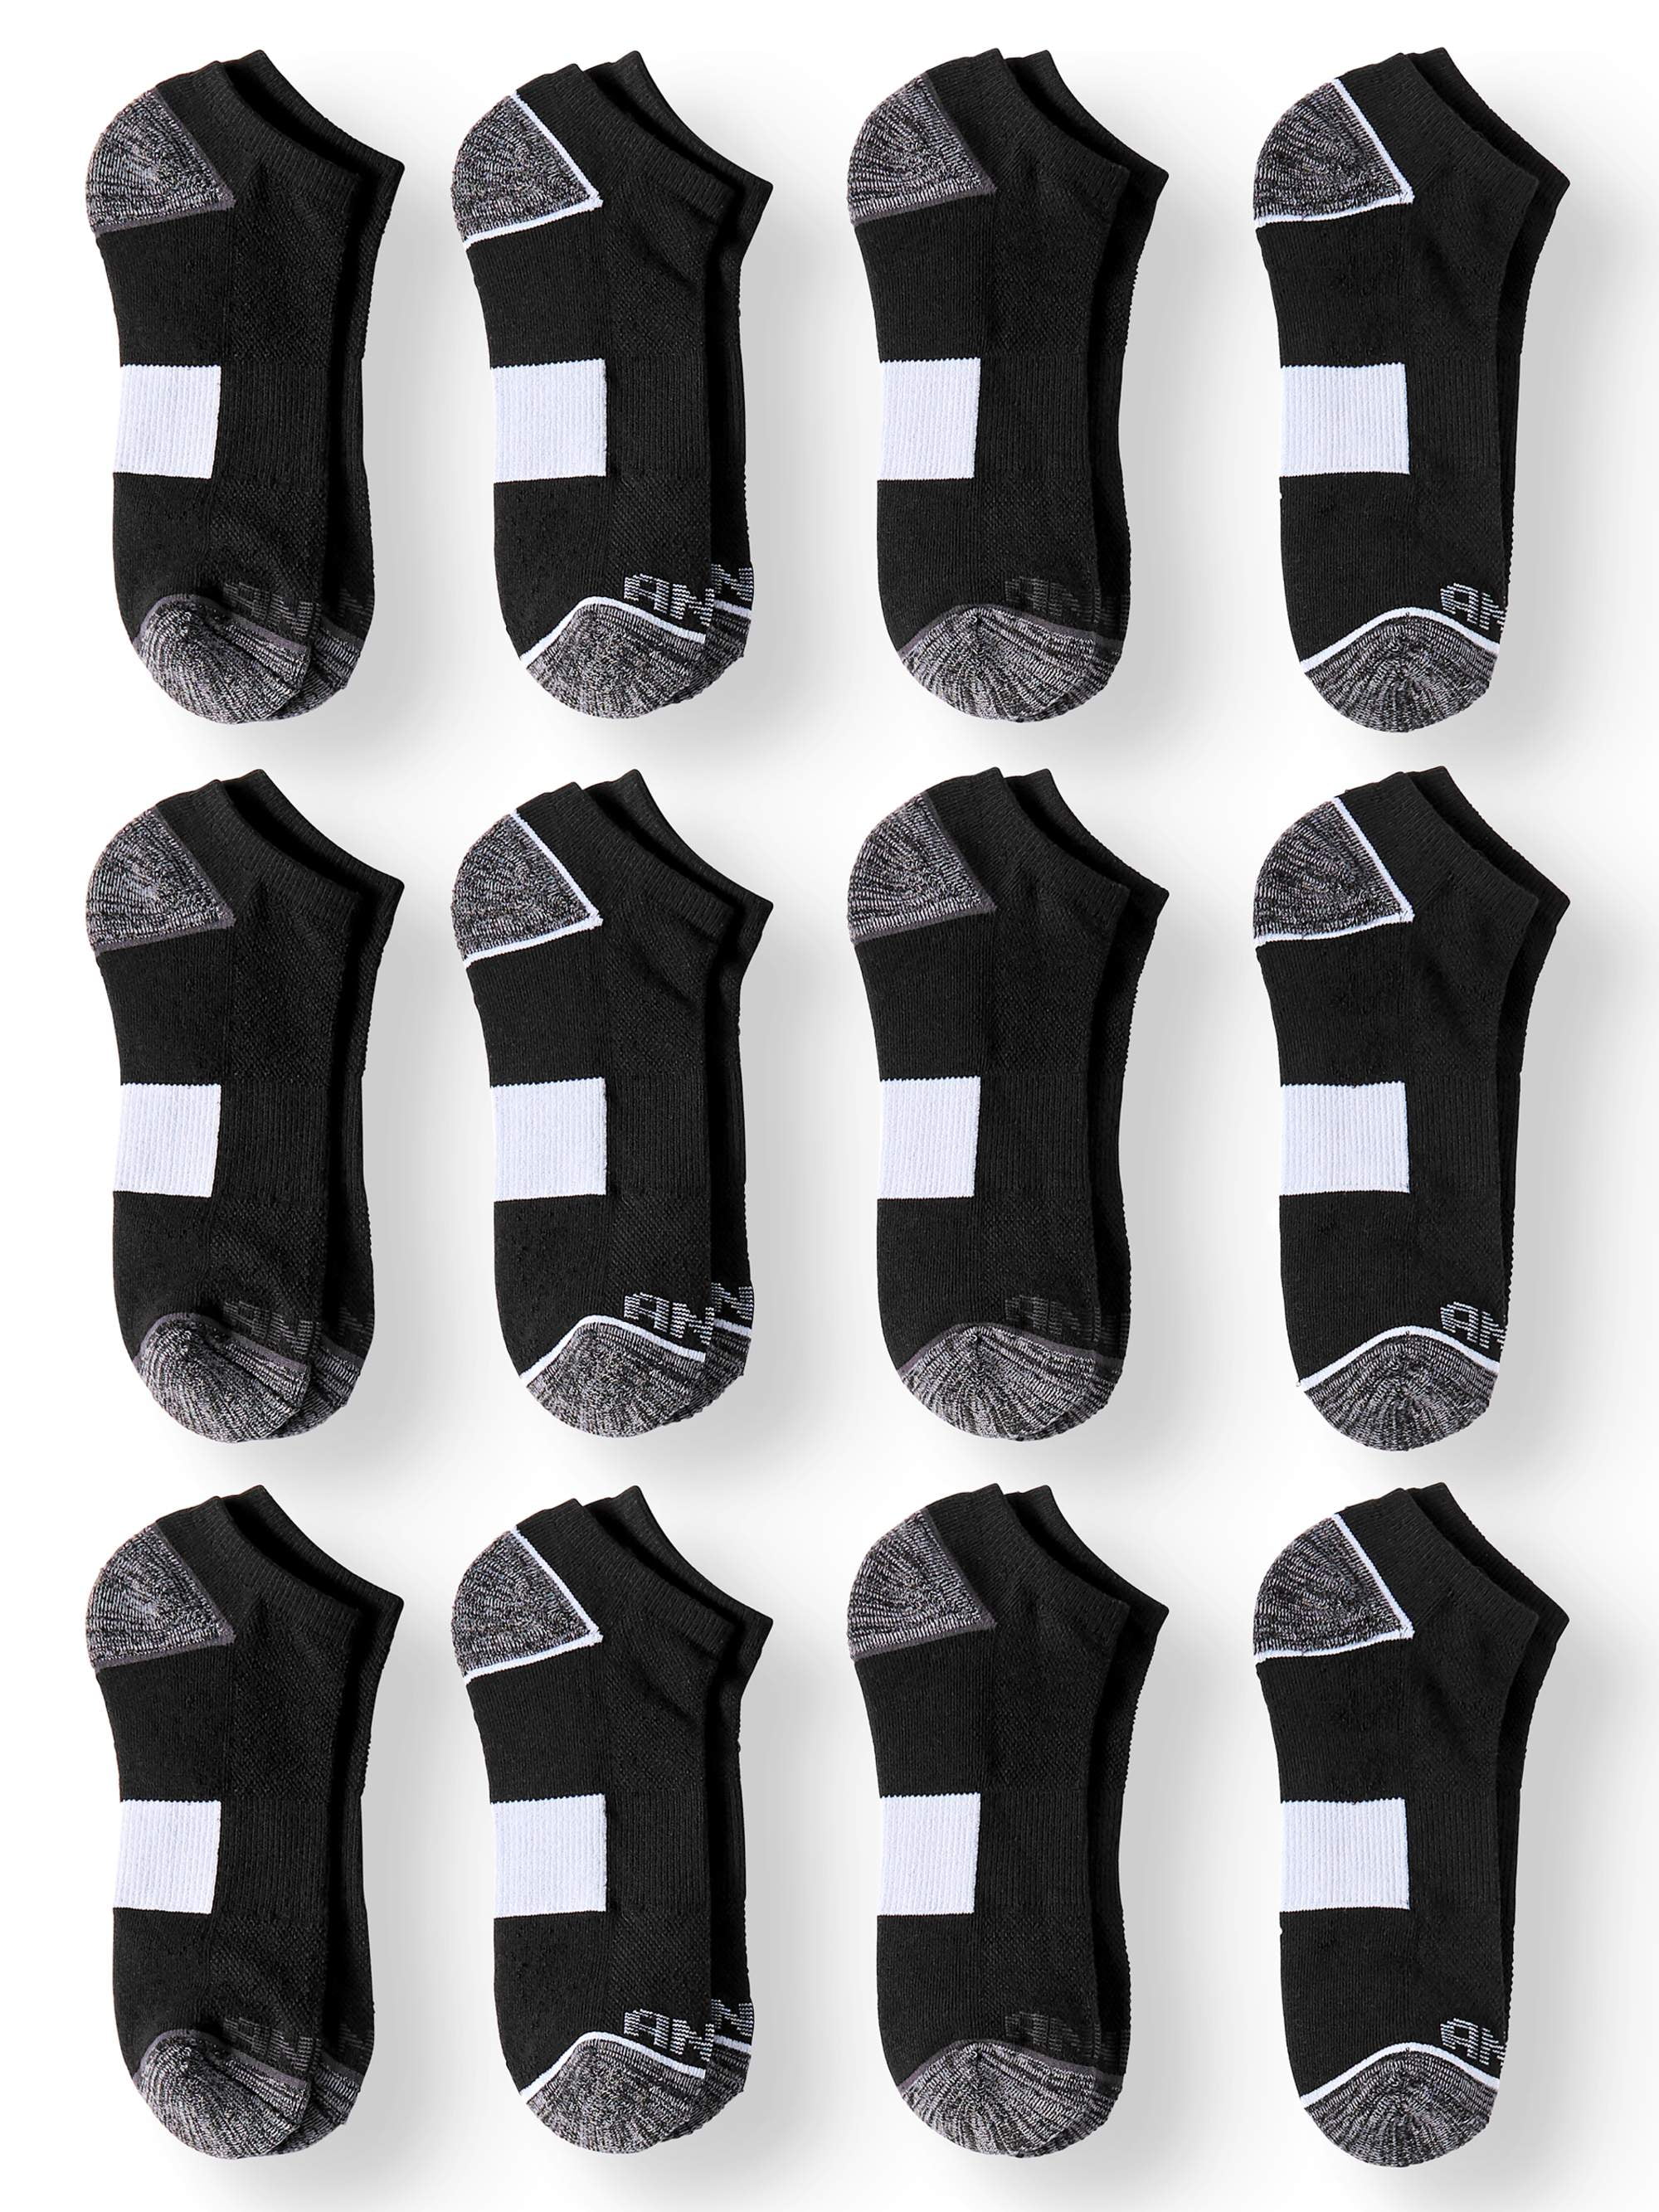 Men's Pro Platinum Low Cut Socks, 12 pack - Walmart.com